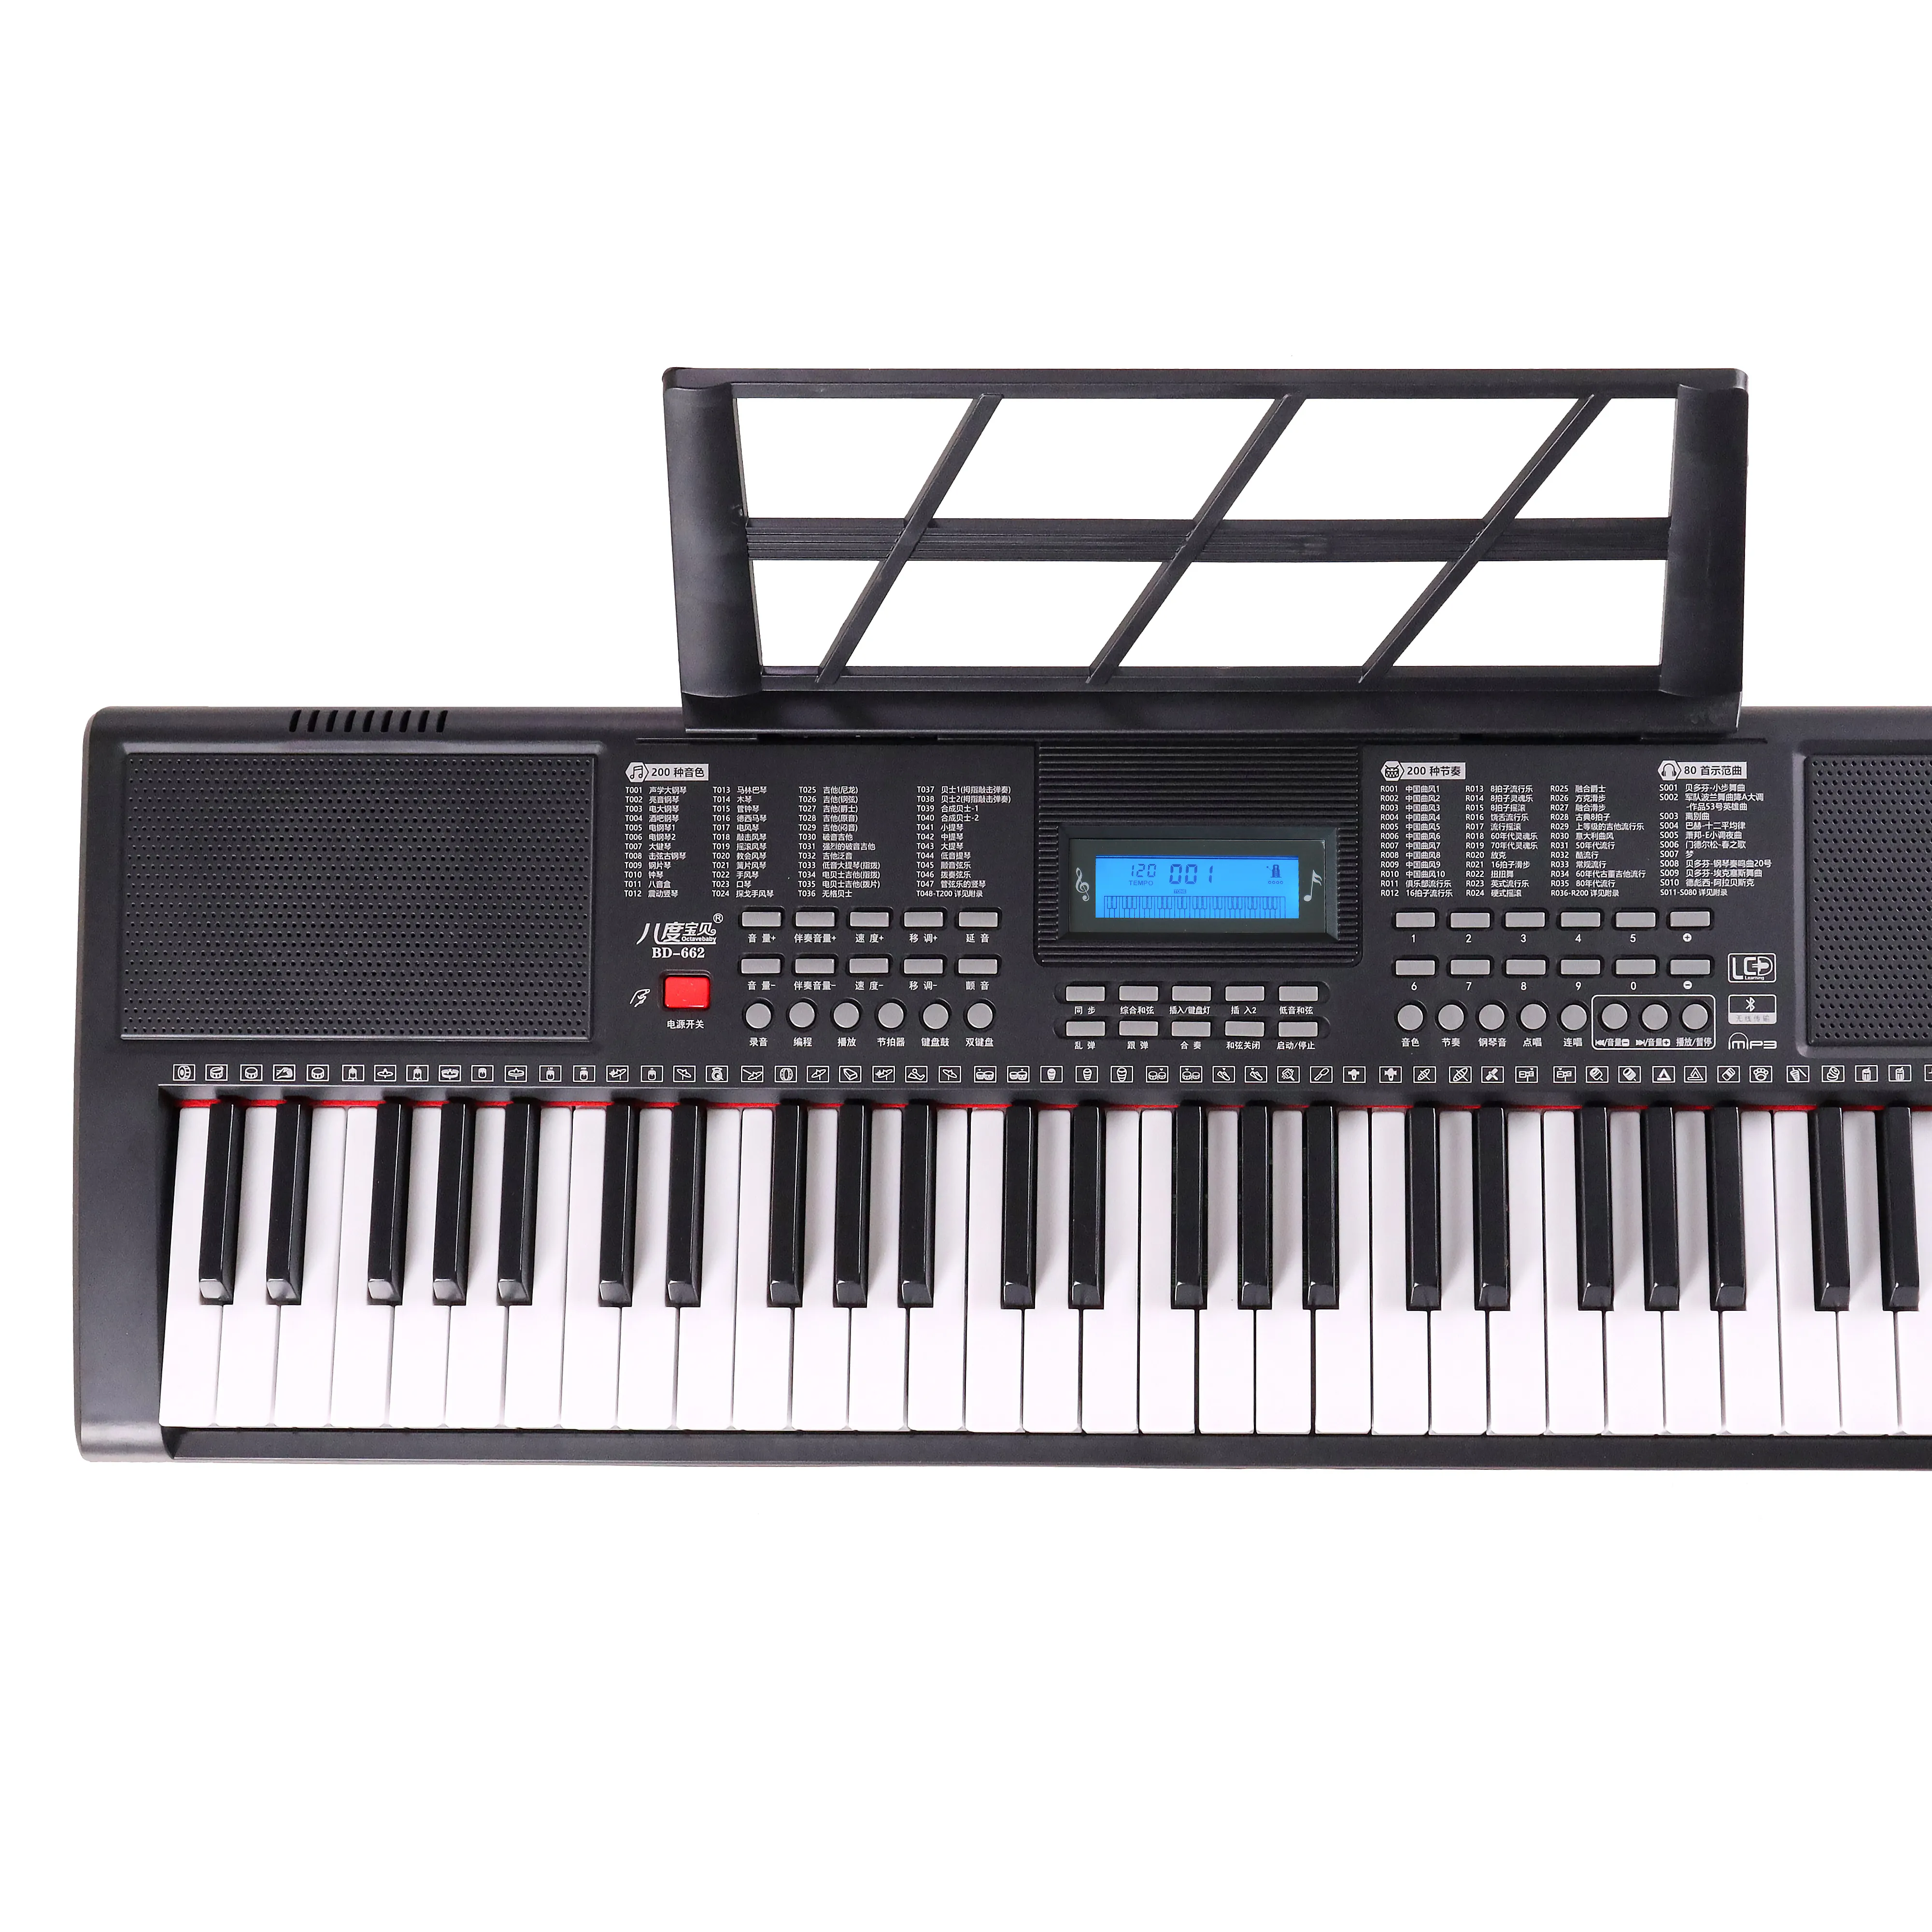 Instrumen musik pengajaran MP3 kualitas tinggi Keyboard Organ Piano profesional semi-professional dengan 61 tombol